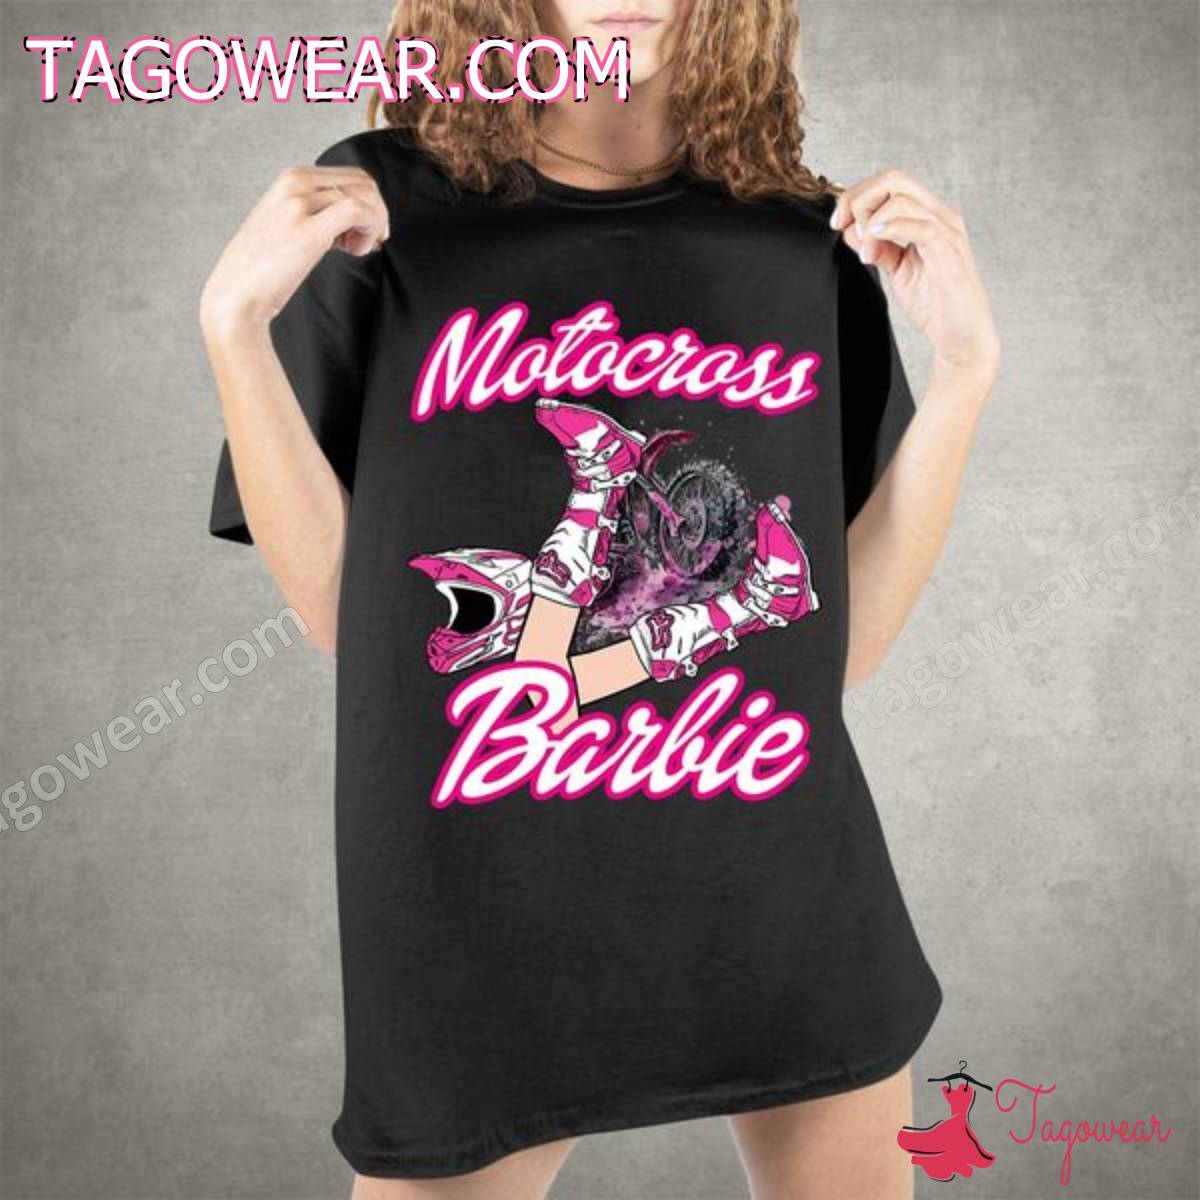 Motocross Barbie Shirt